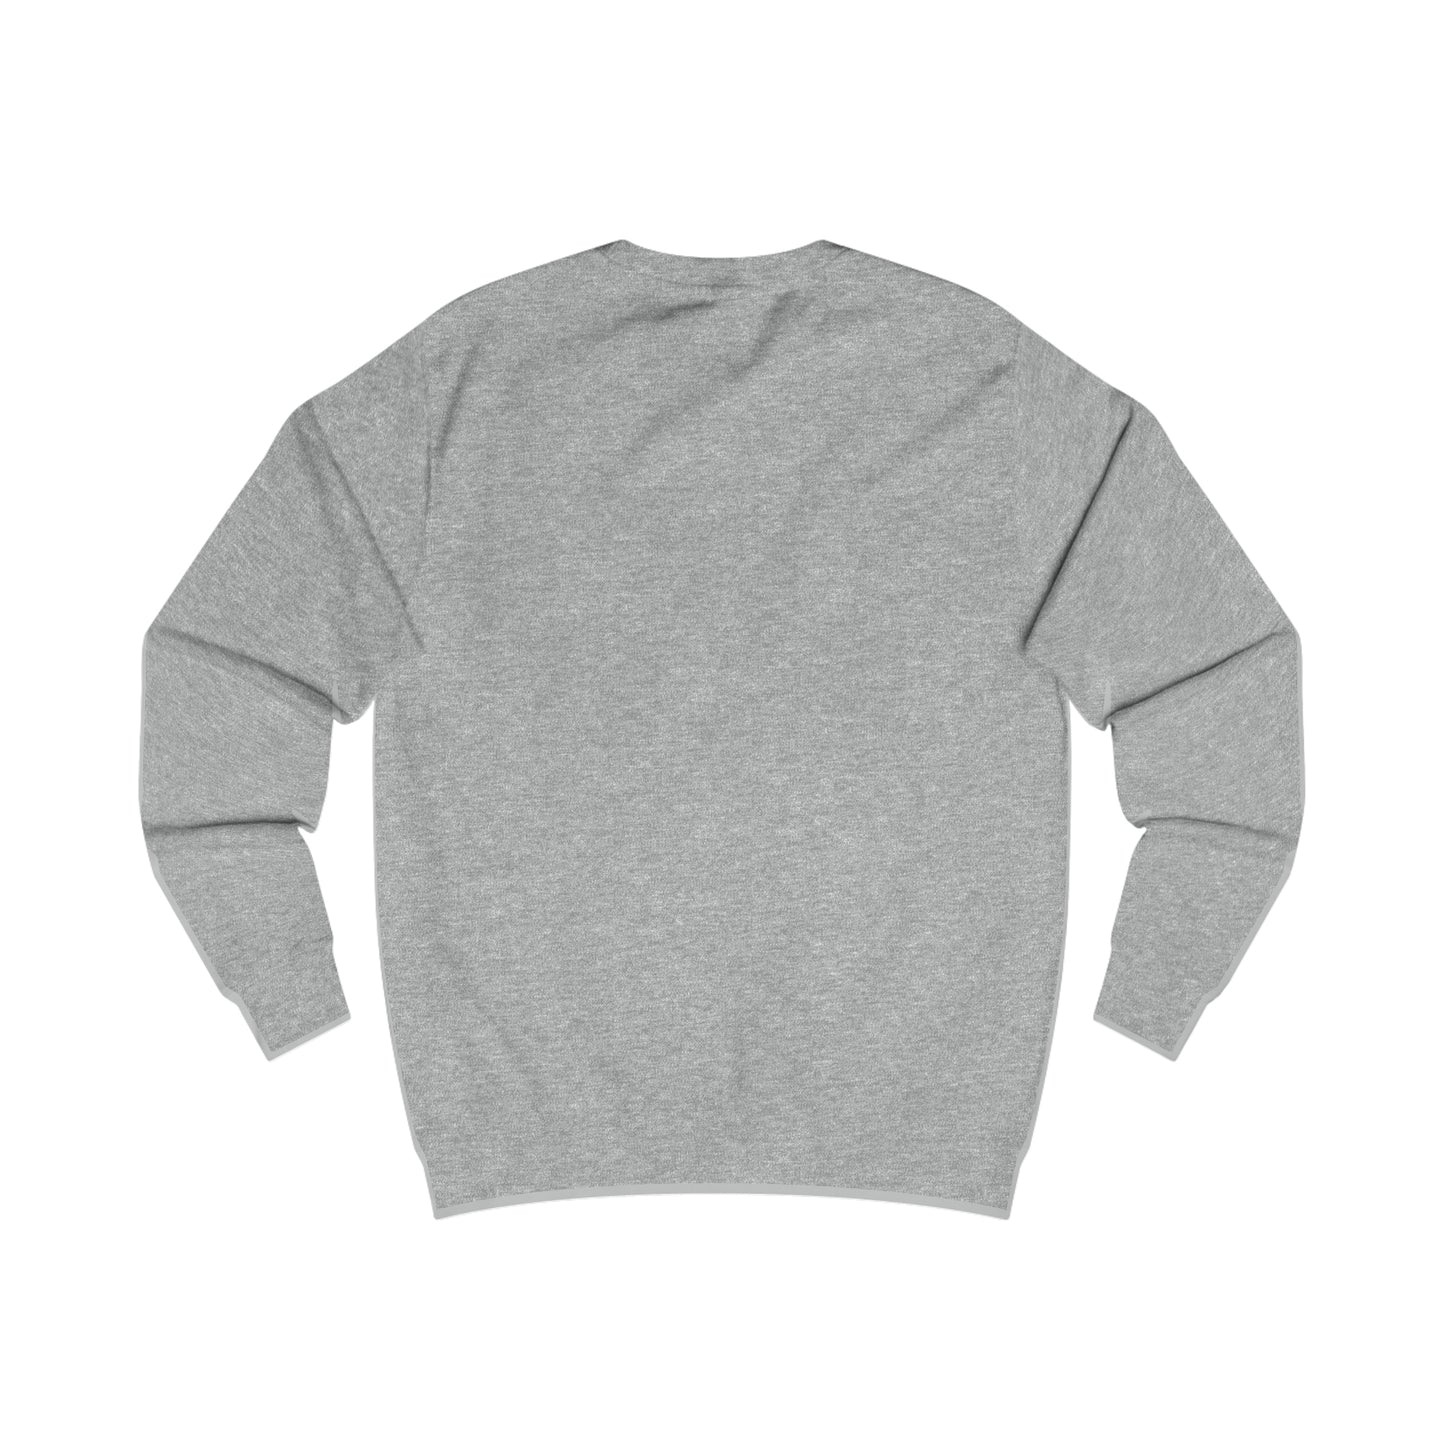 Ugly Mold Sweater - Men's Sweatshirt